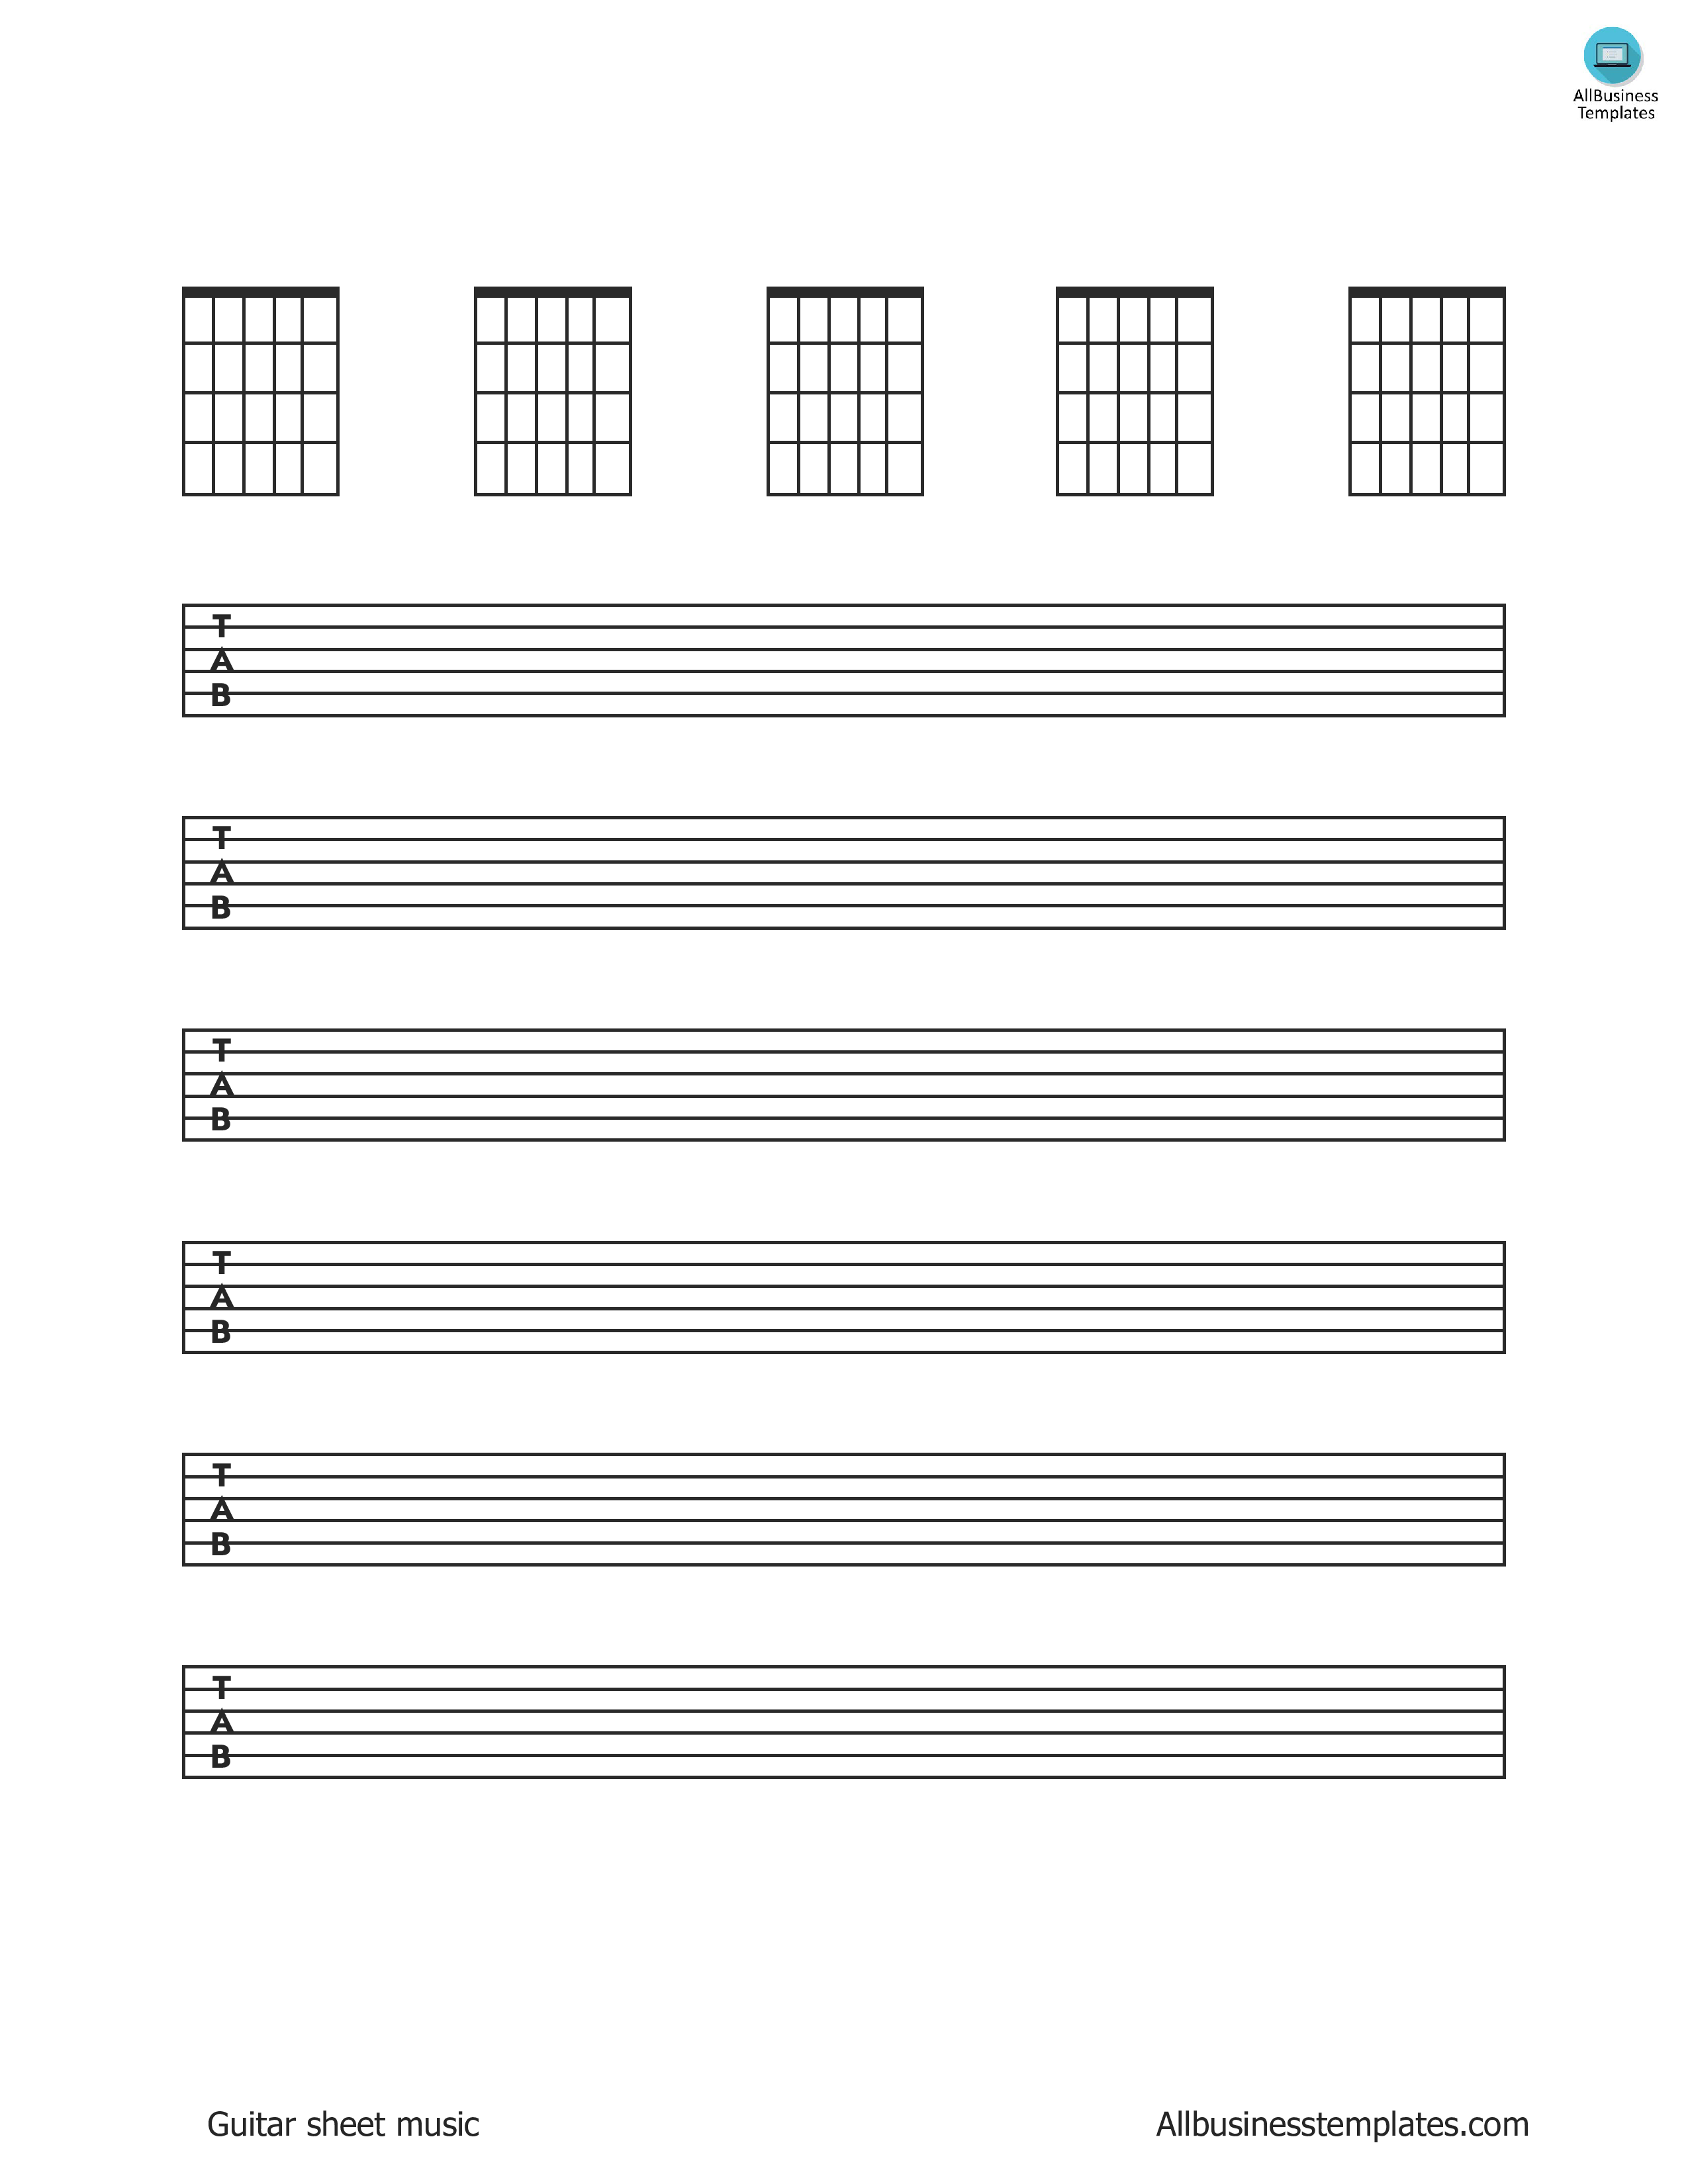 guitar sheet music sheets plantilla imagen principal